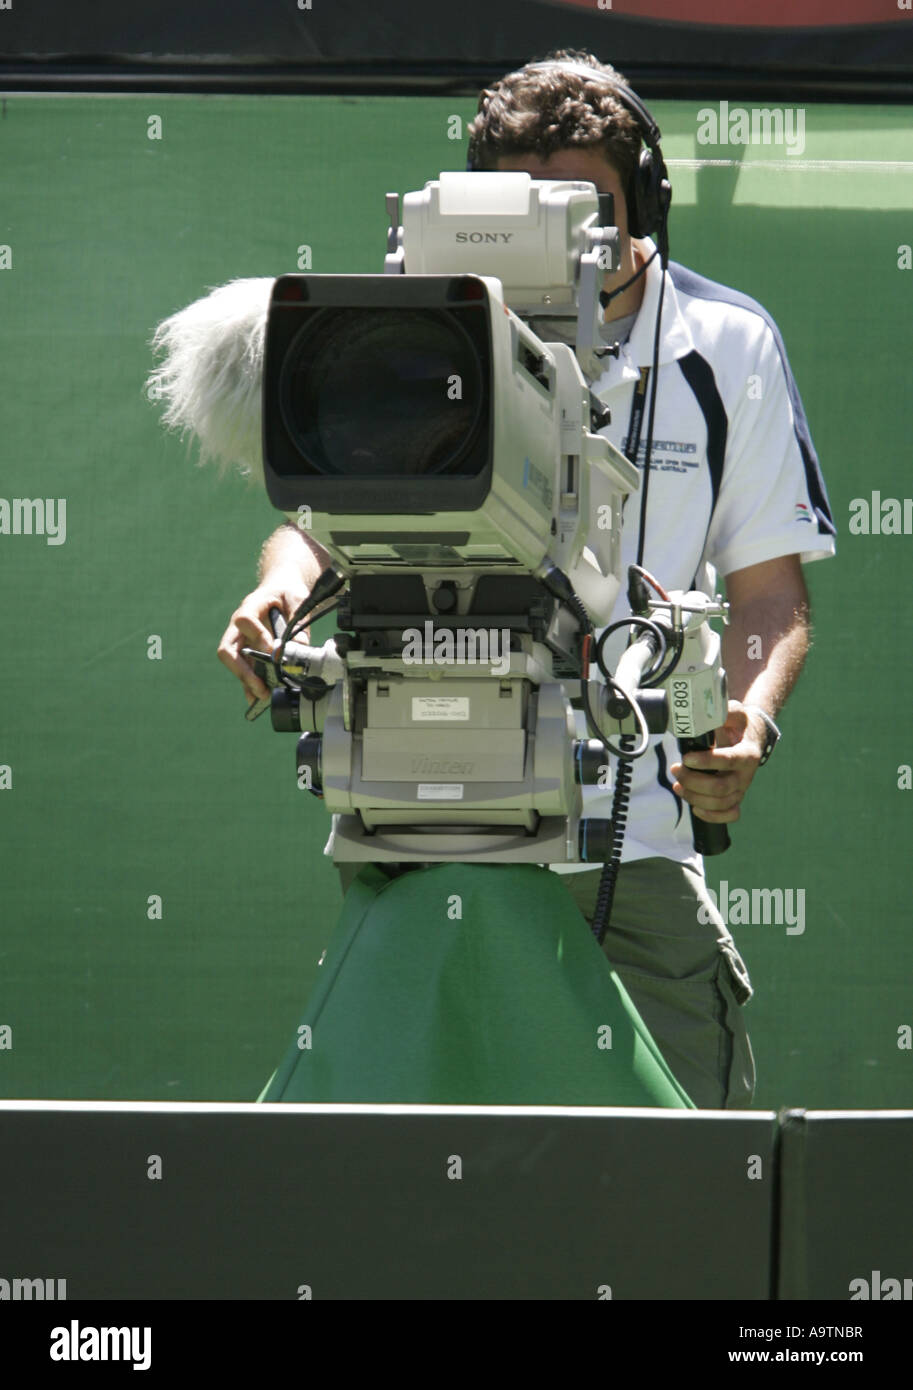 TV camera man at work Stock Photo